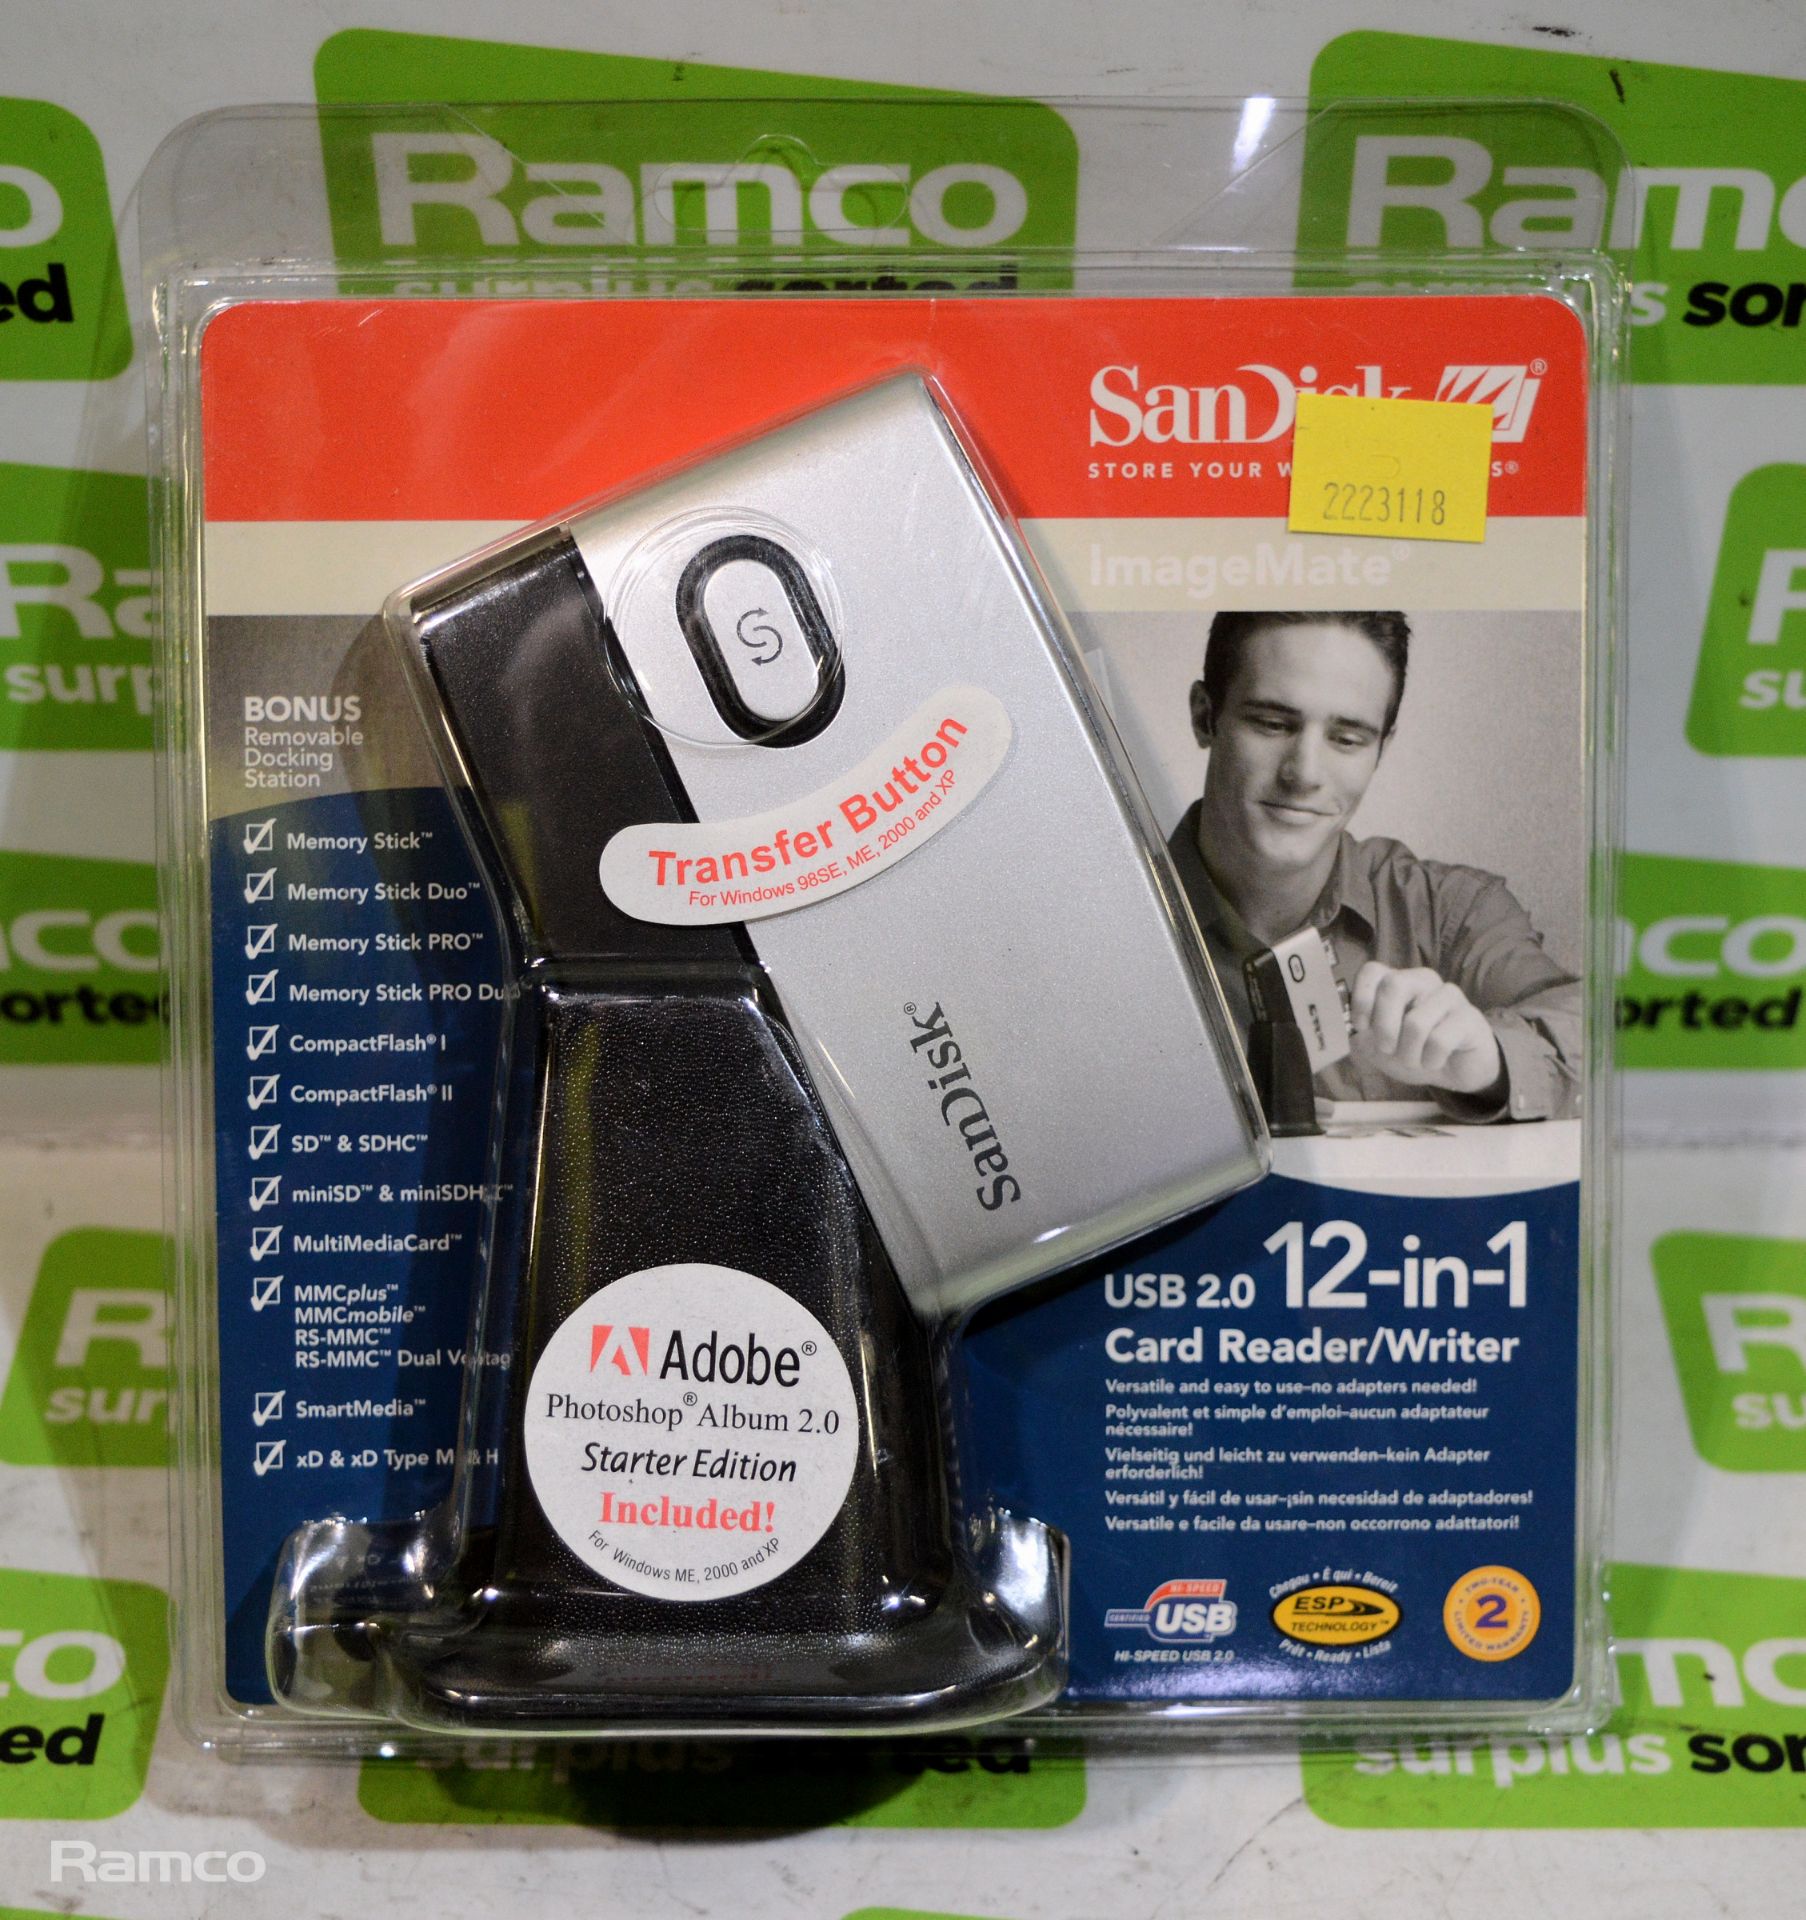 7x SanDisk ImageMate USB 2.0 12-in-1 Card Reader/Writers, 4x Garmin eTrex Automotive Adjustable - Image 4 of 5